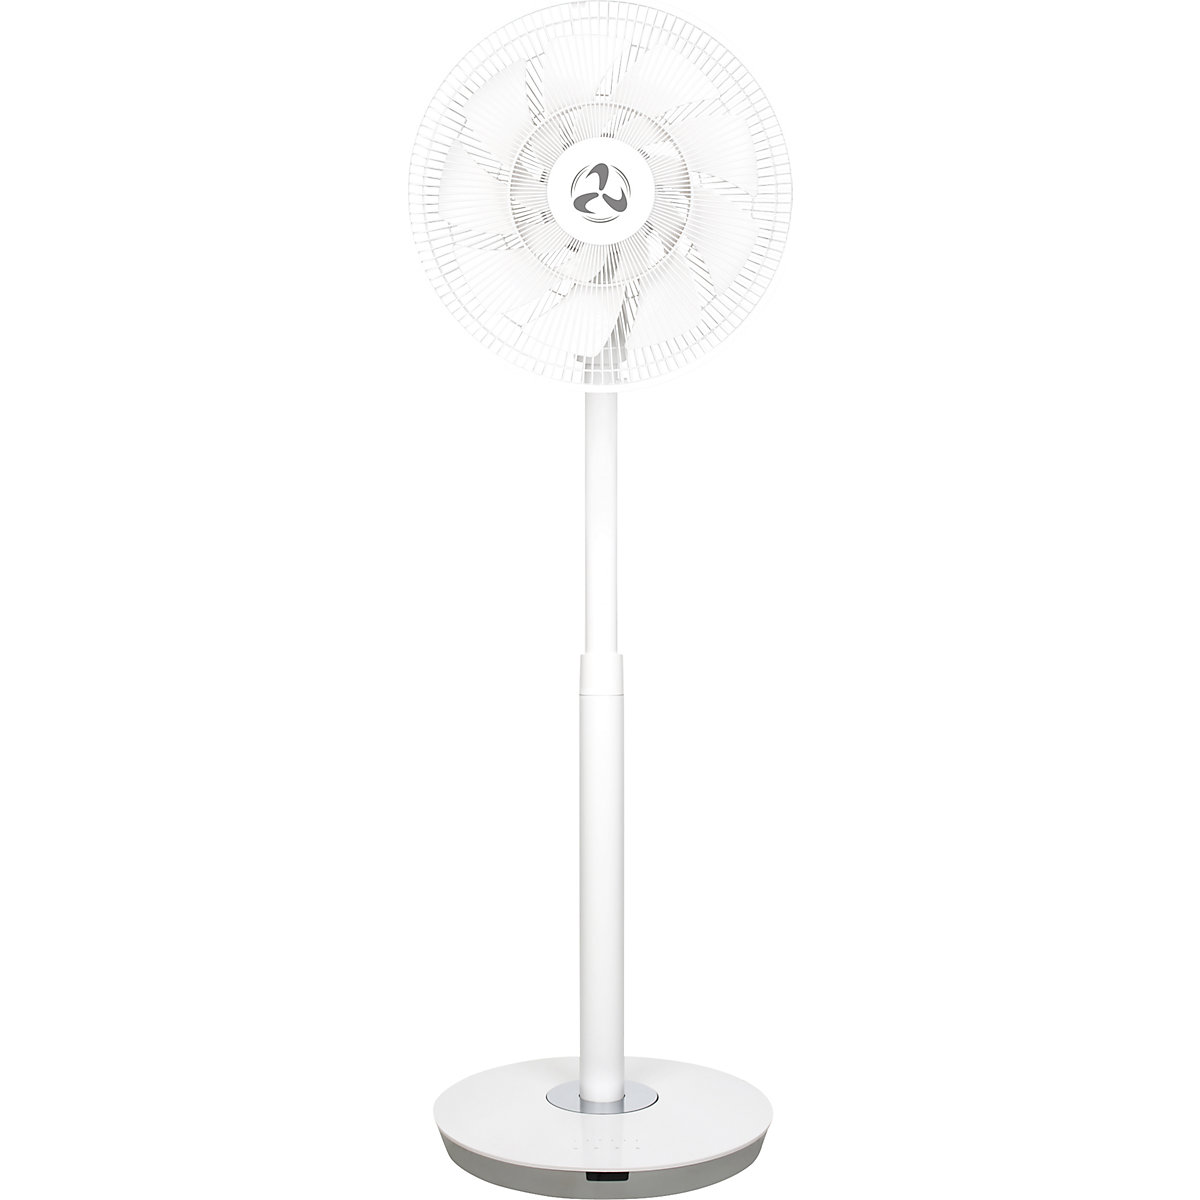 Airos Eco pedestal fan